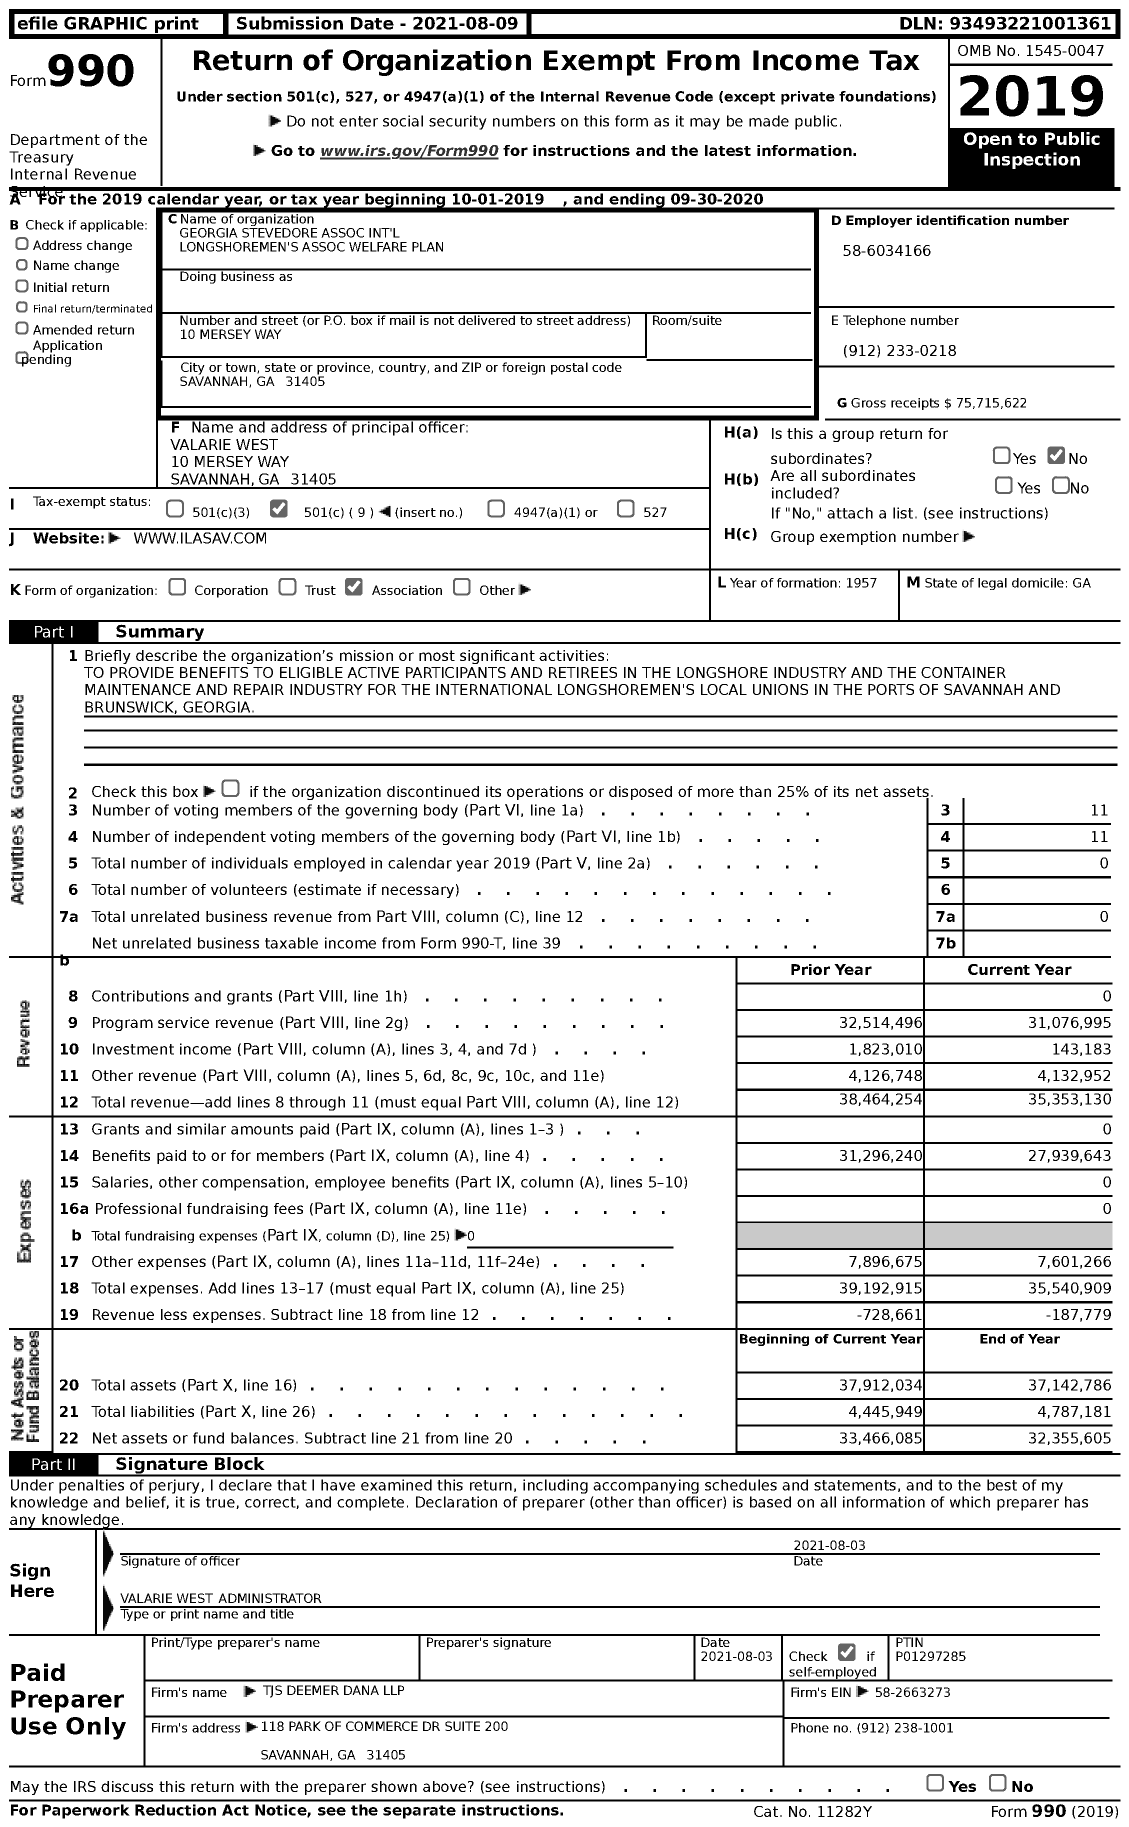 Image of first page of 2019 Form 990 for Georgia Stevedore Association International Longshoremen's Association Welfare Plan